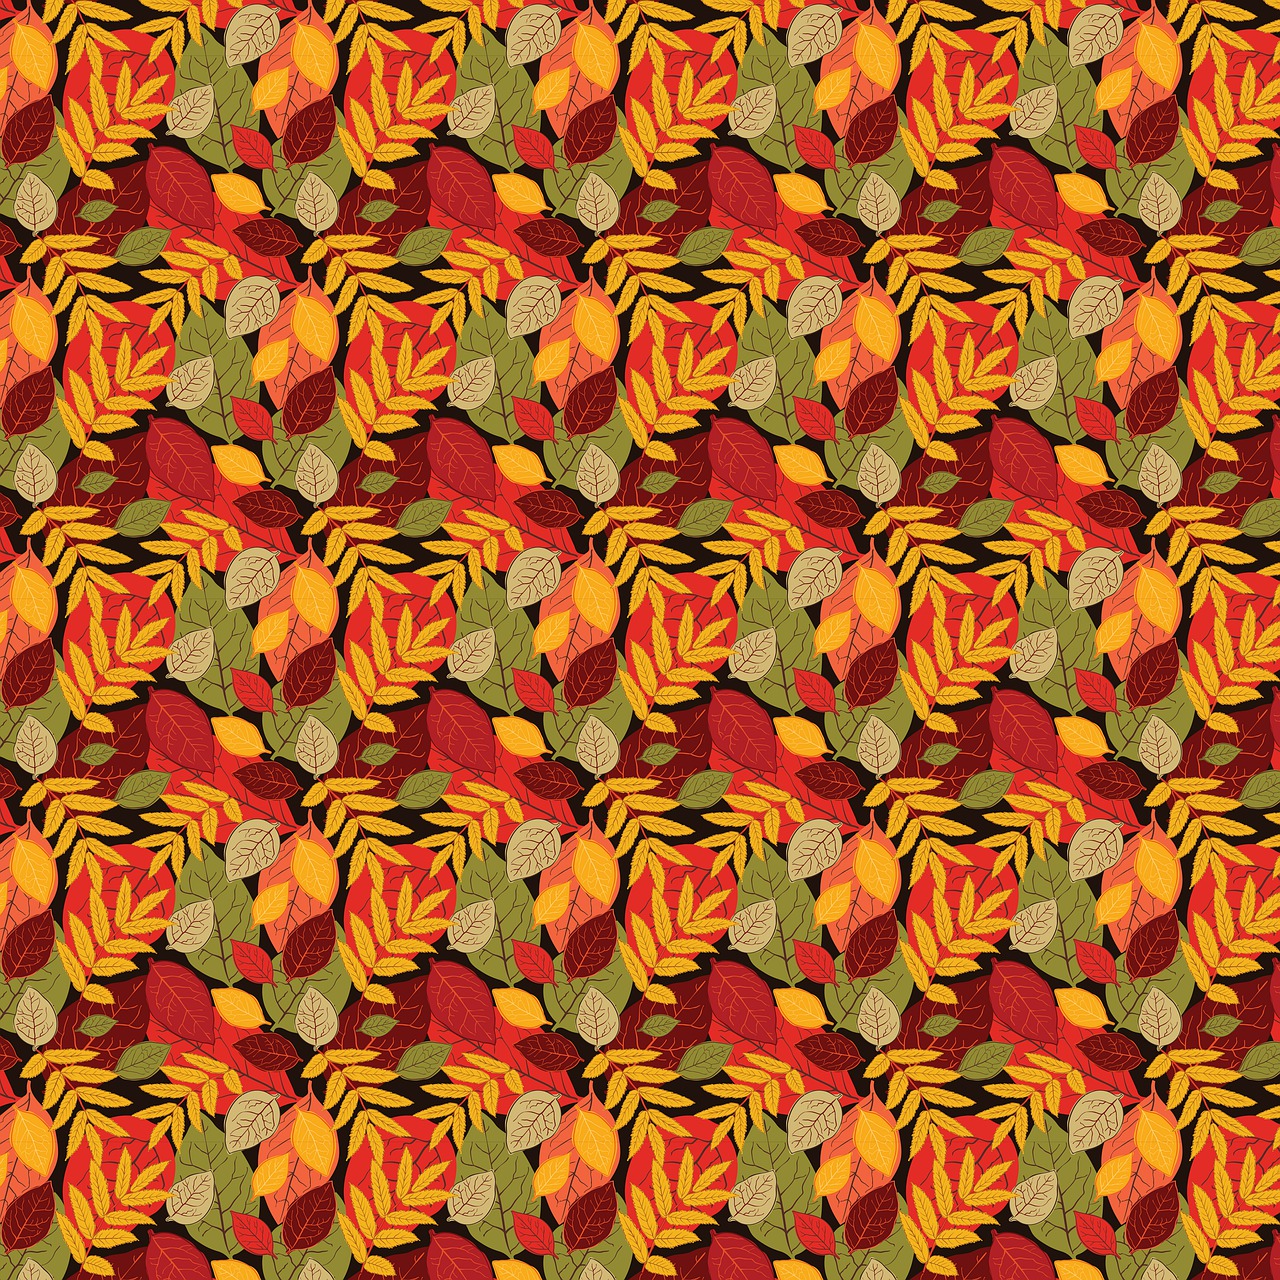 a pattern of leaves on a red background, inspired by Lubin Baugin, yellows and reddish black, autumn leaves on the ground, dense thickets on each side, aaaaaaaaaaaaaaaaaaaaaa